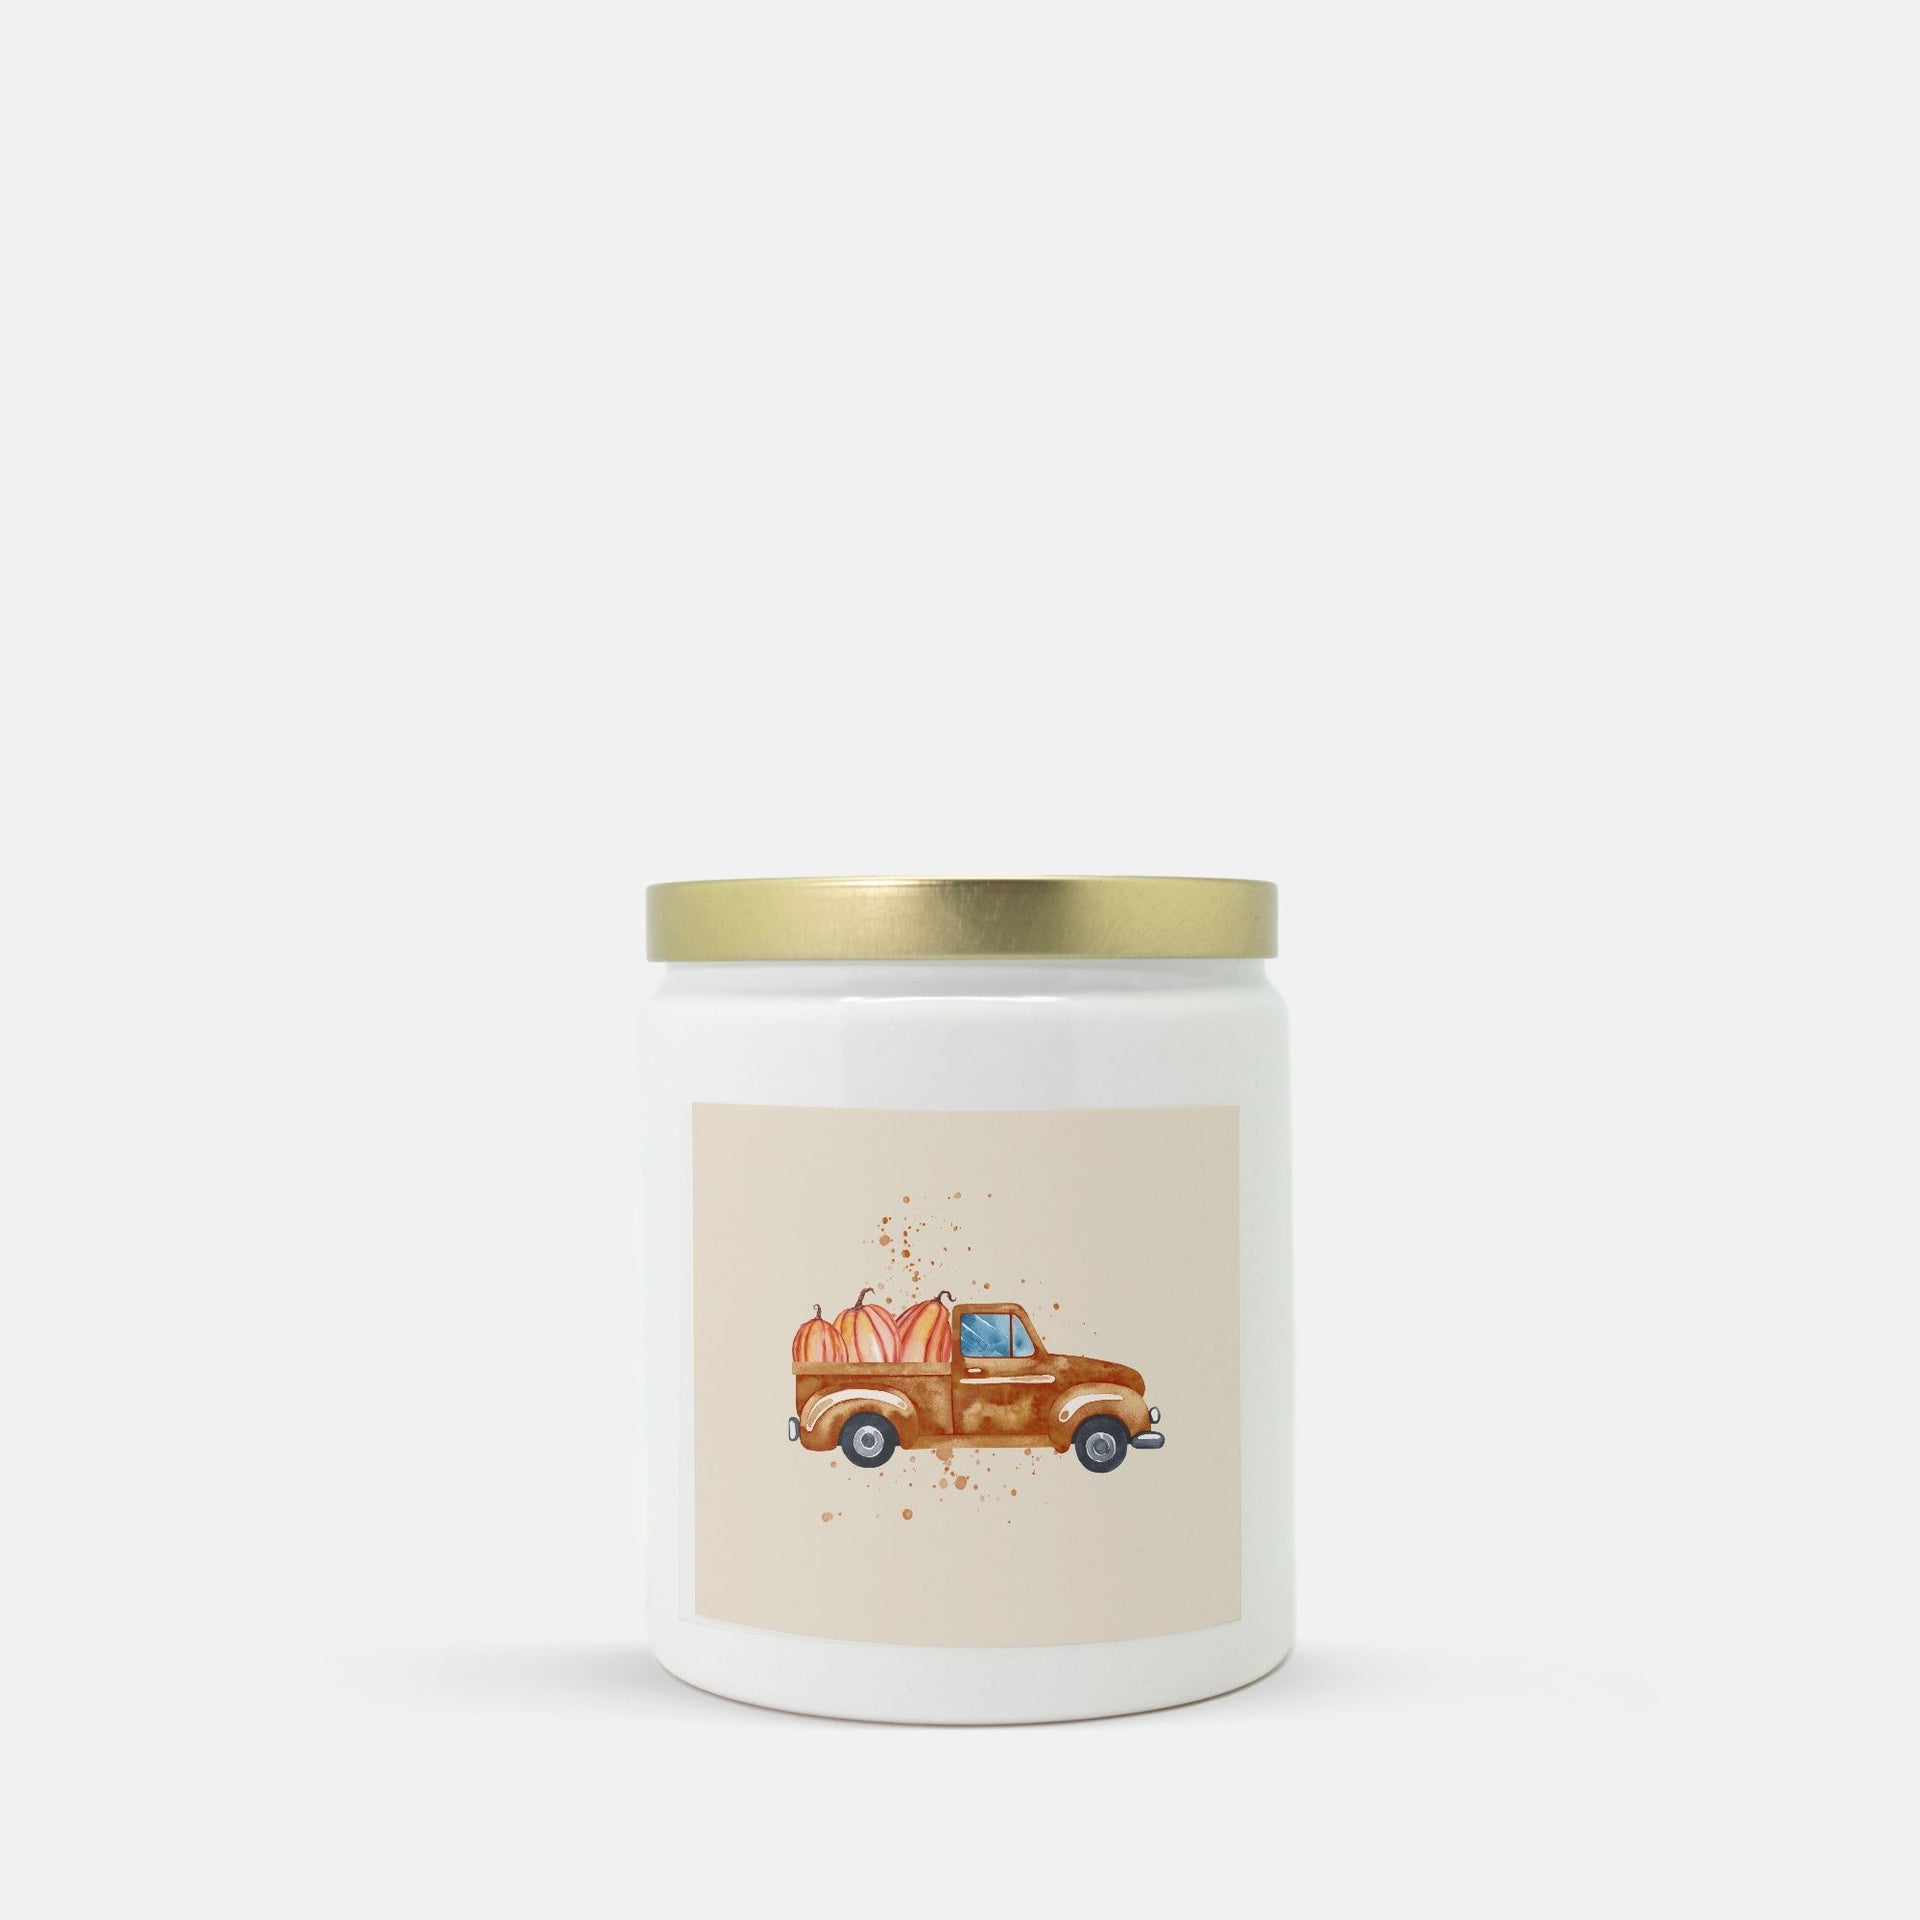 Lifestyle Details - Brown Rustic Truck & Pumpkins Ceramic Candle w Gold Lid - Vanilla Bean